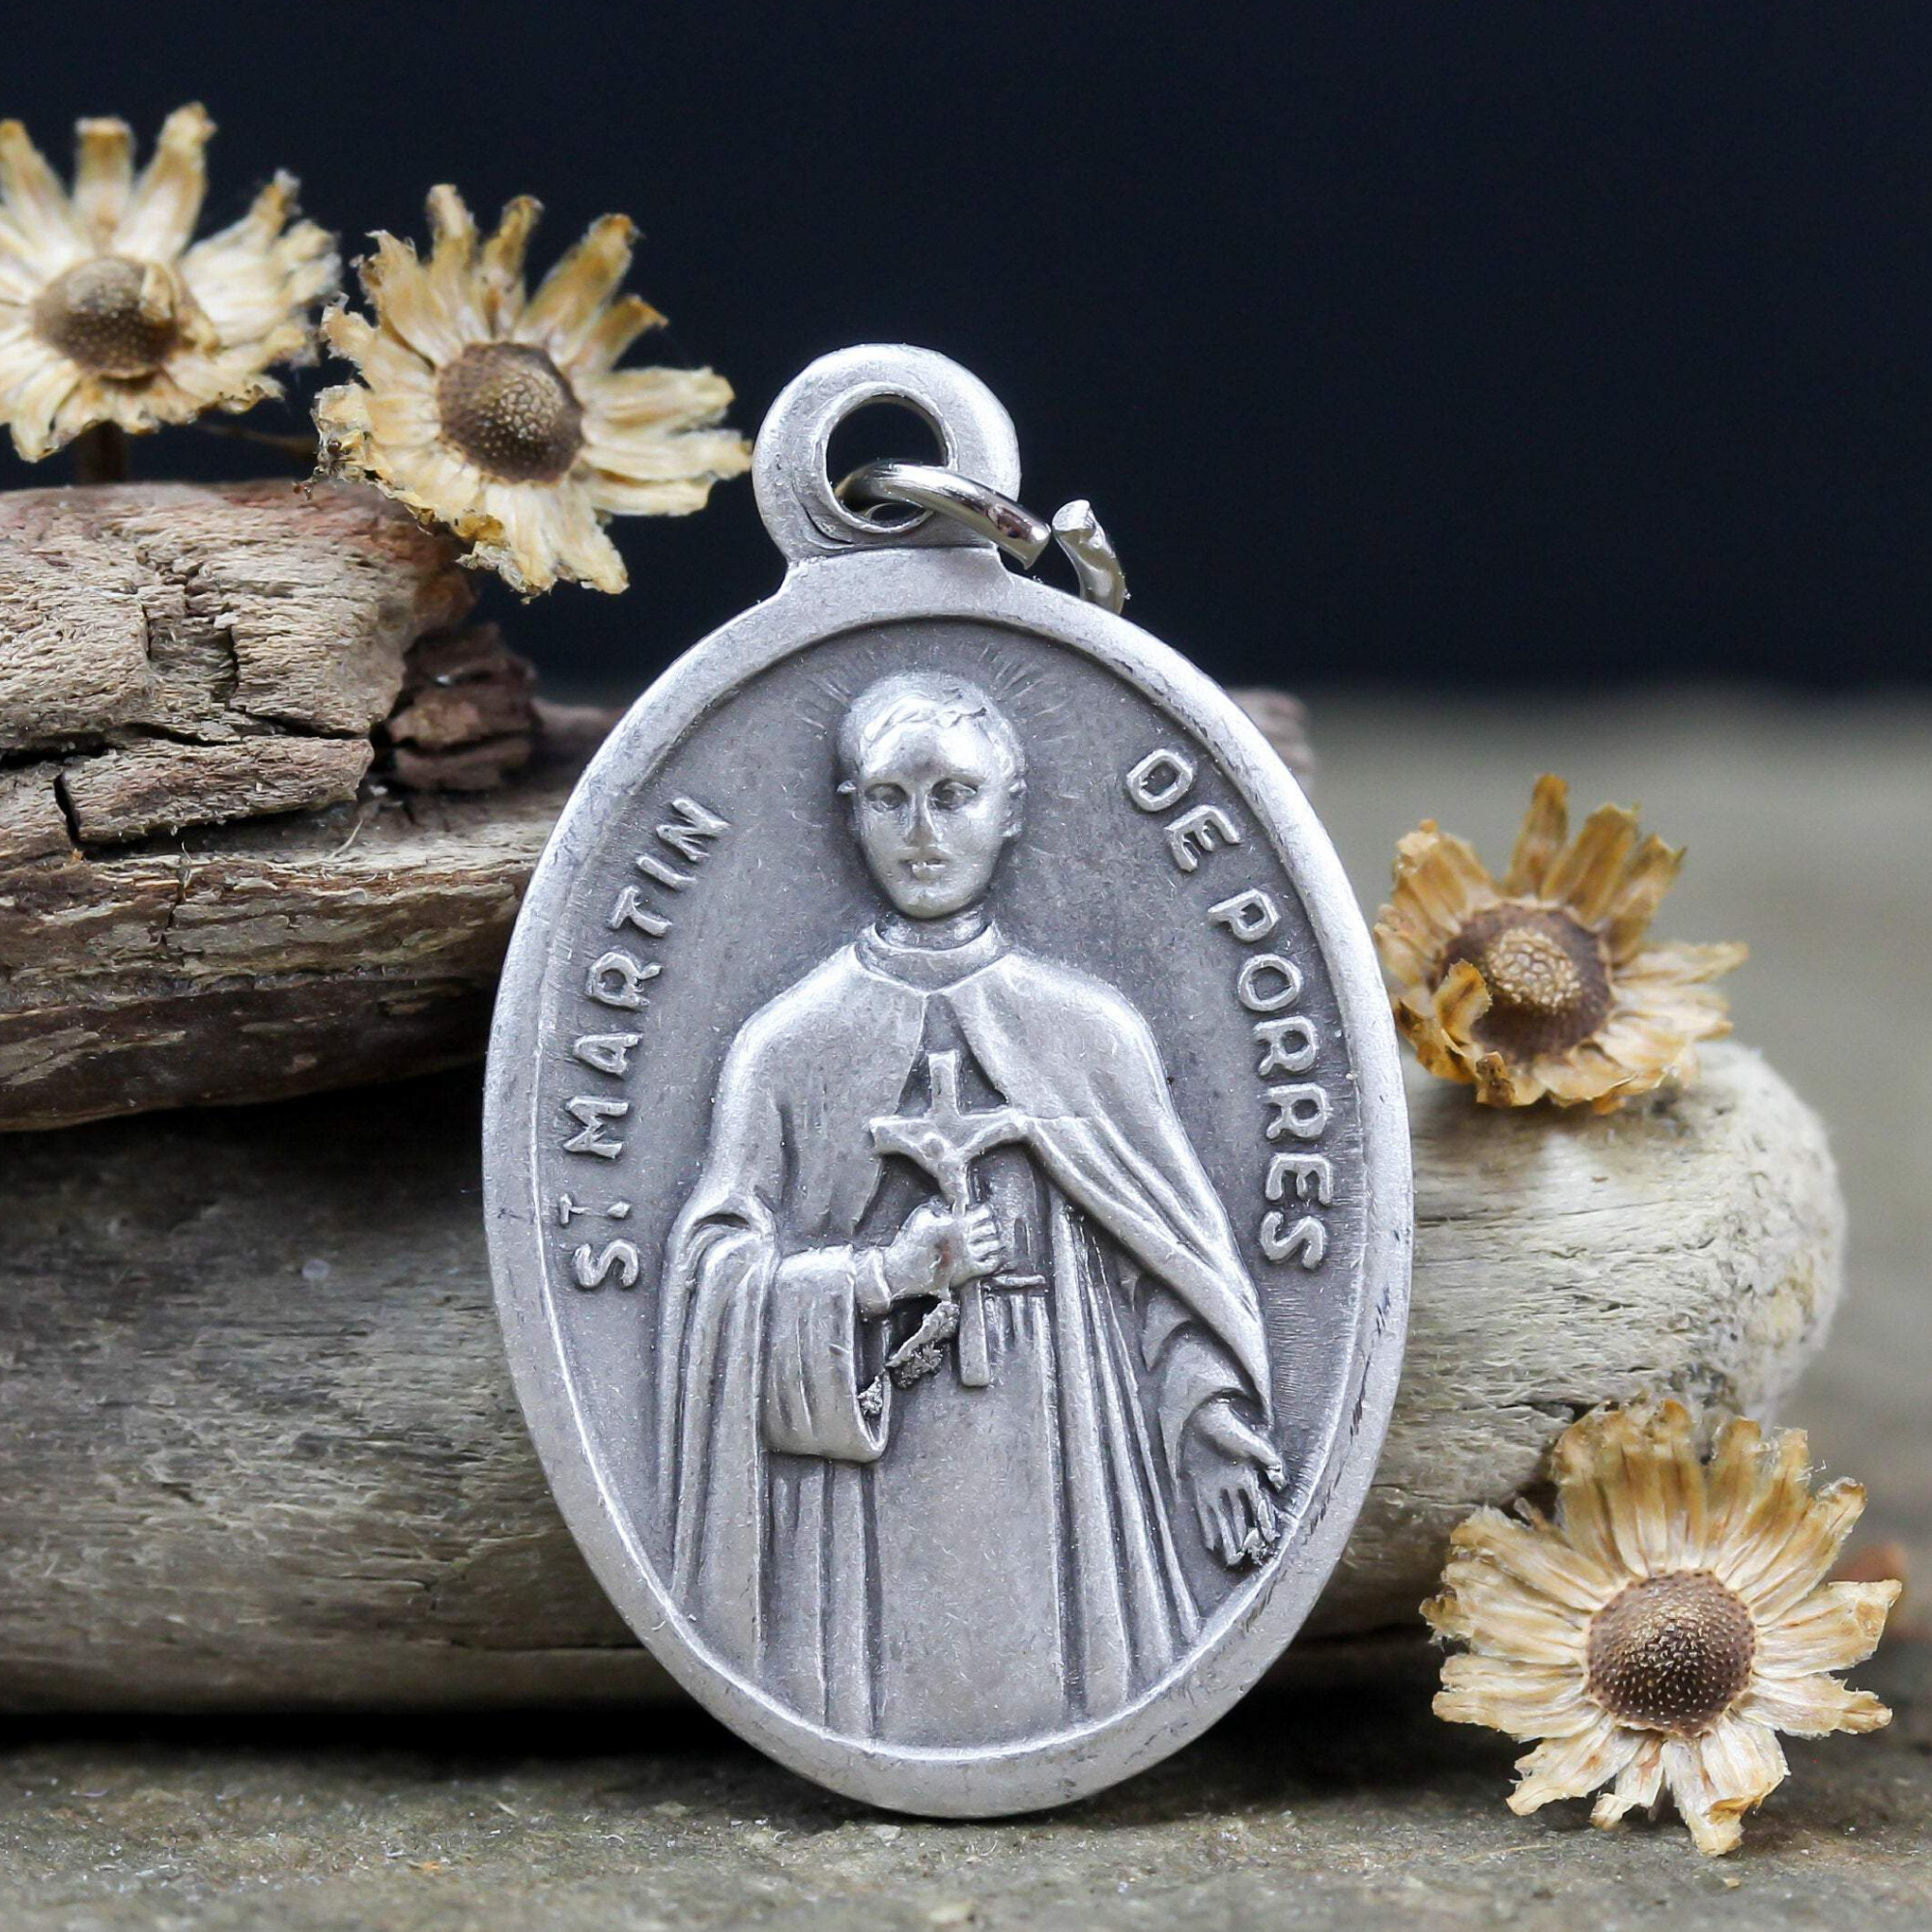 Saint Martin de Porres die cast silver one inch oval medal